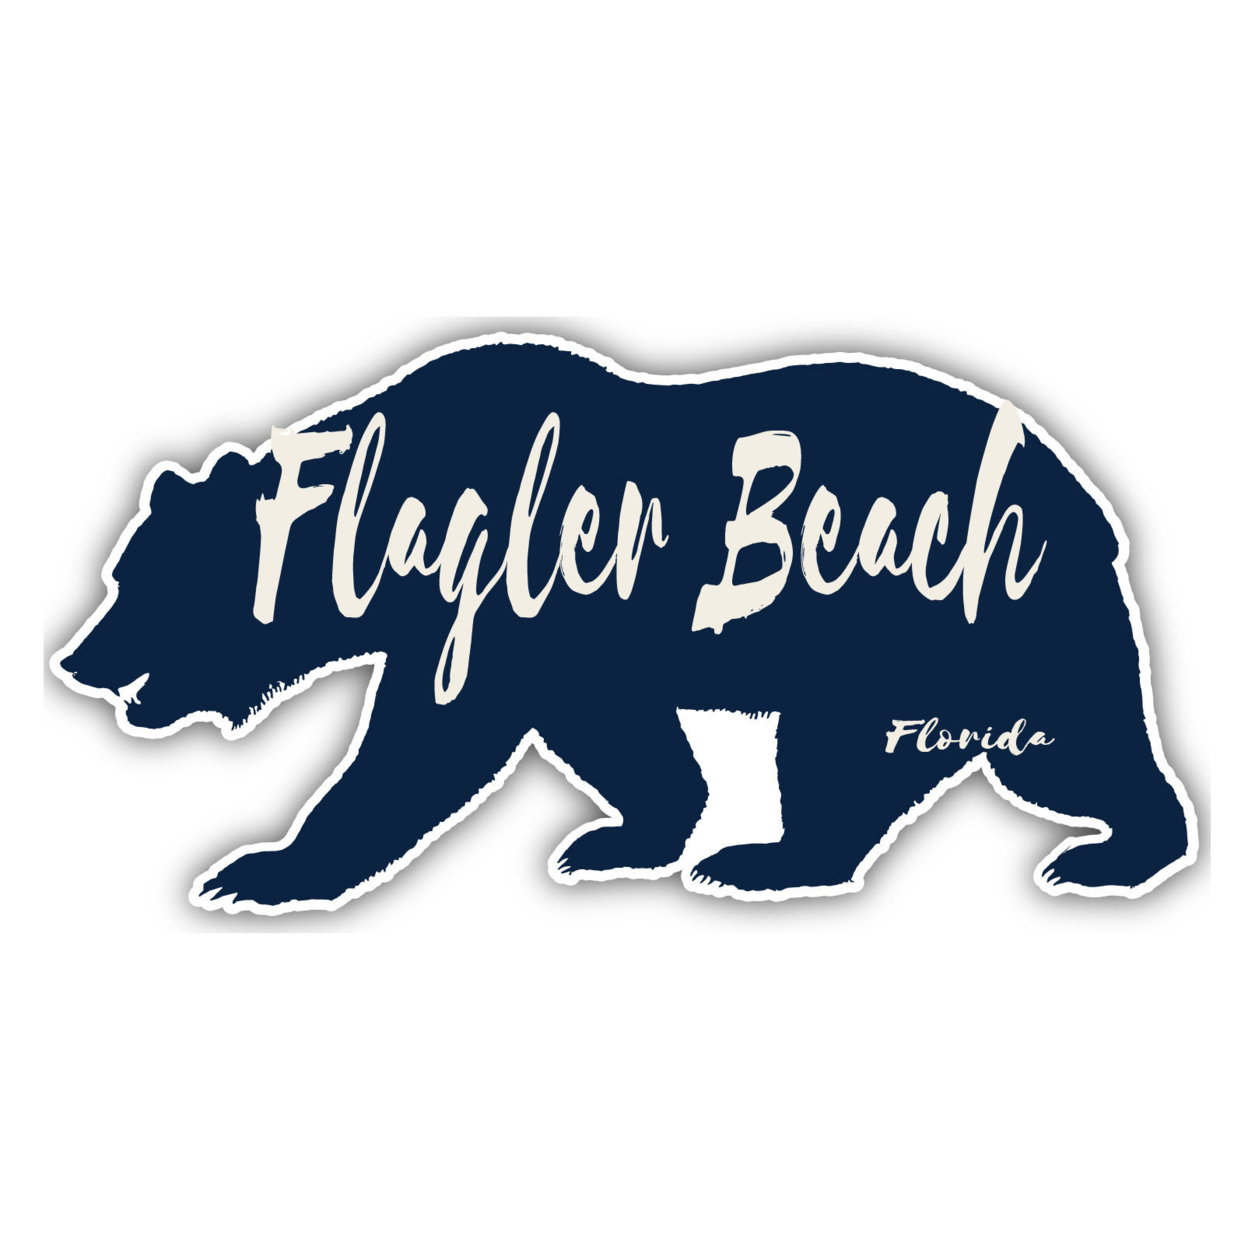 Flagler Beach Florida Souvenir Decorative Stickers (Choose Theme And Size) - Single Unit, 12-Inch, Tent